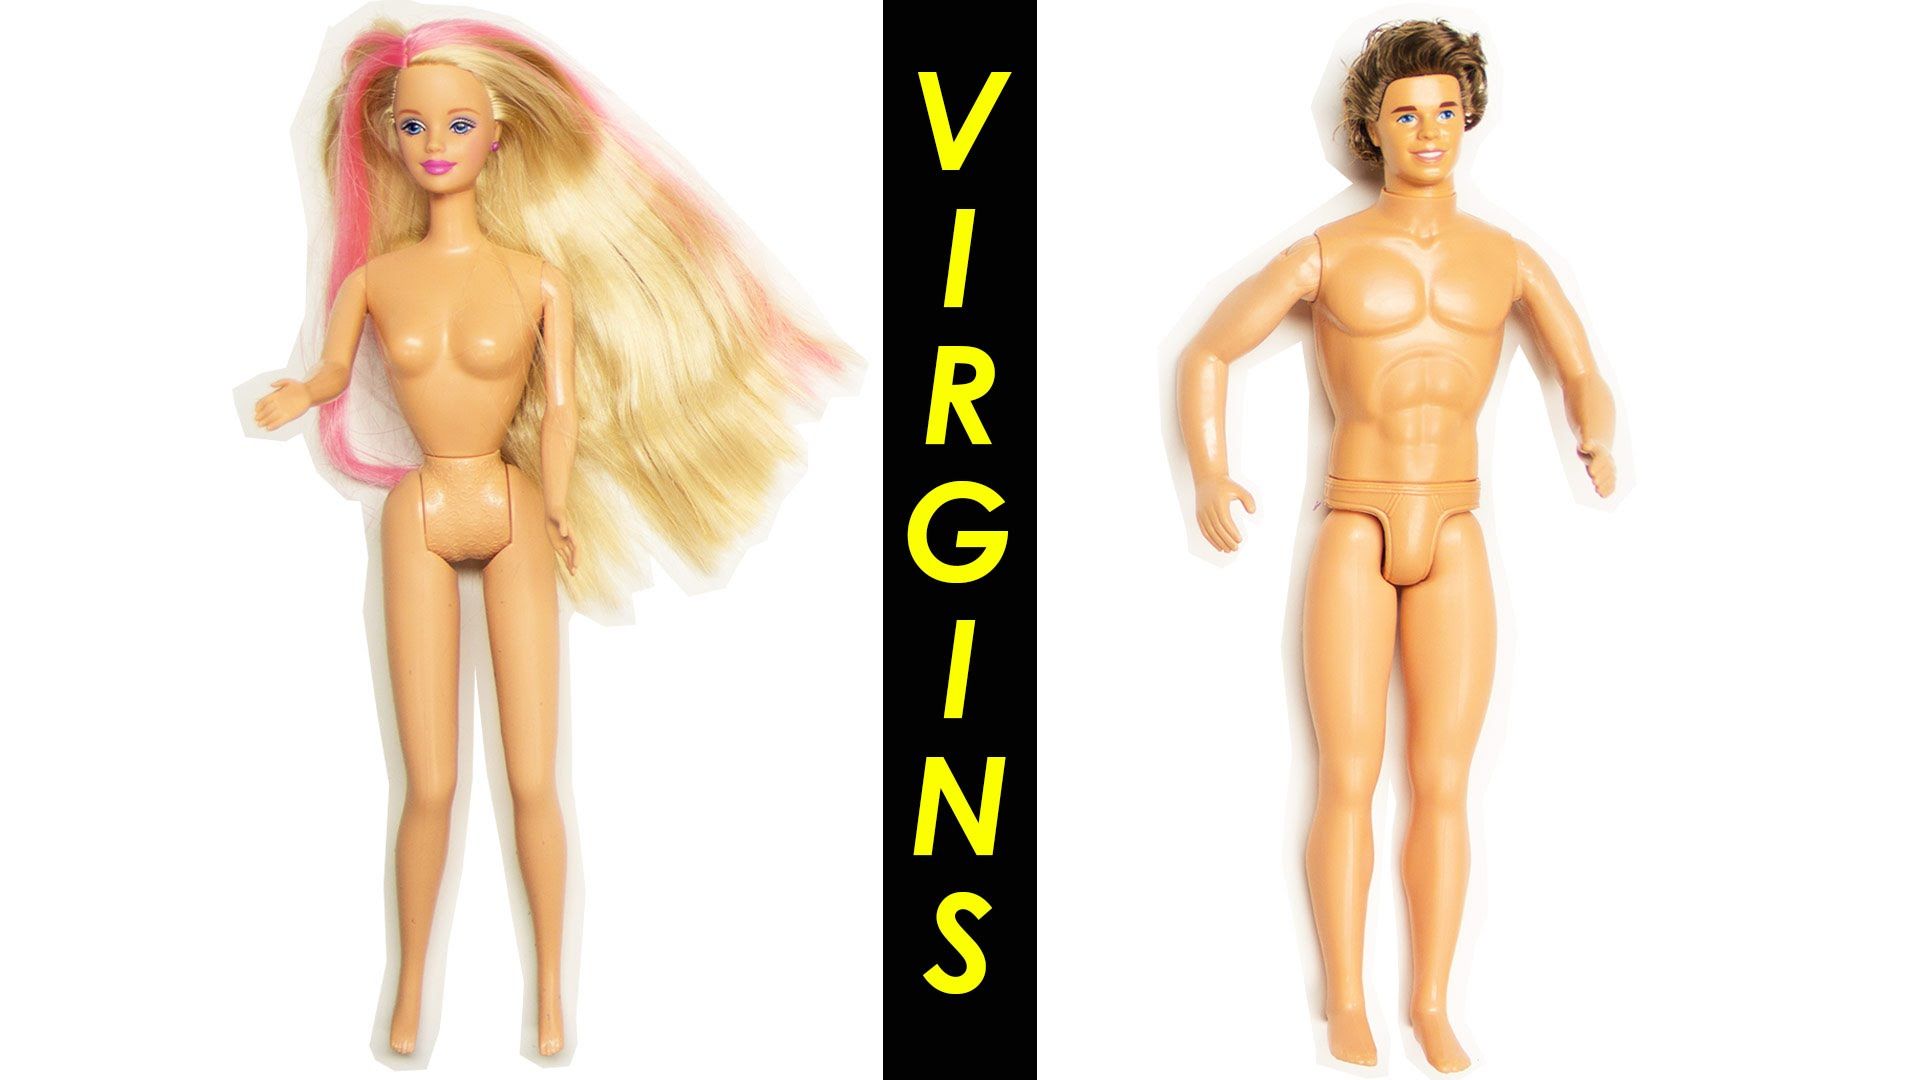 ametuer girls lose virginity